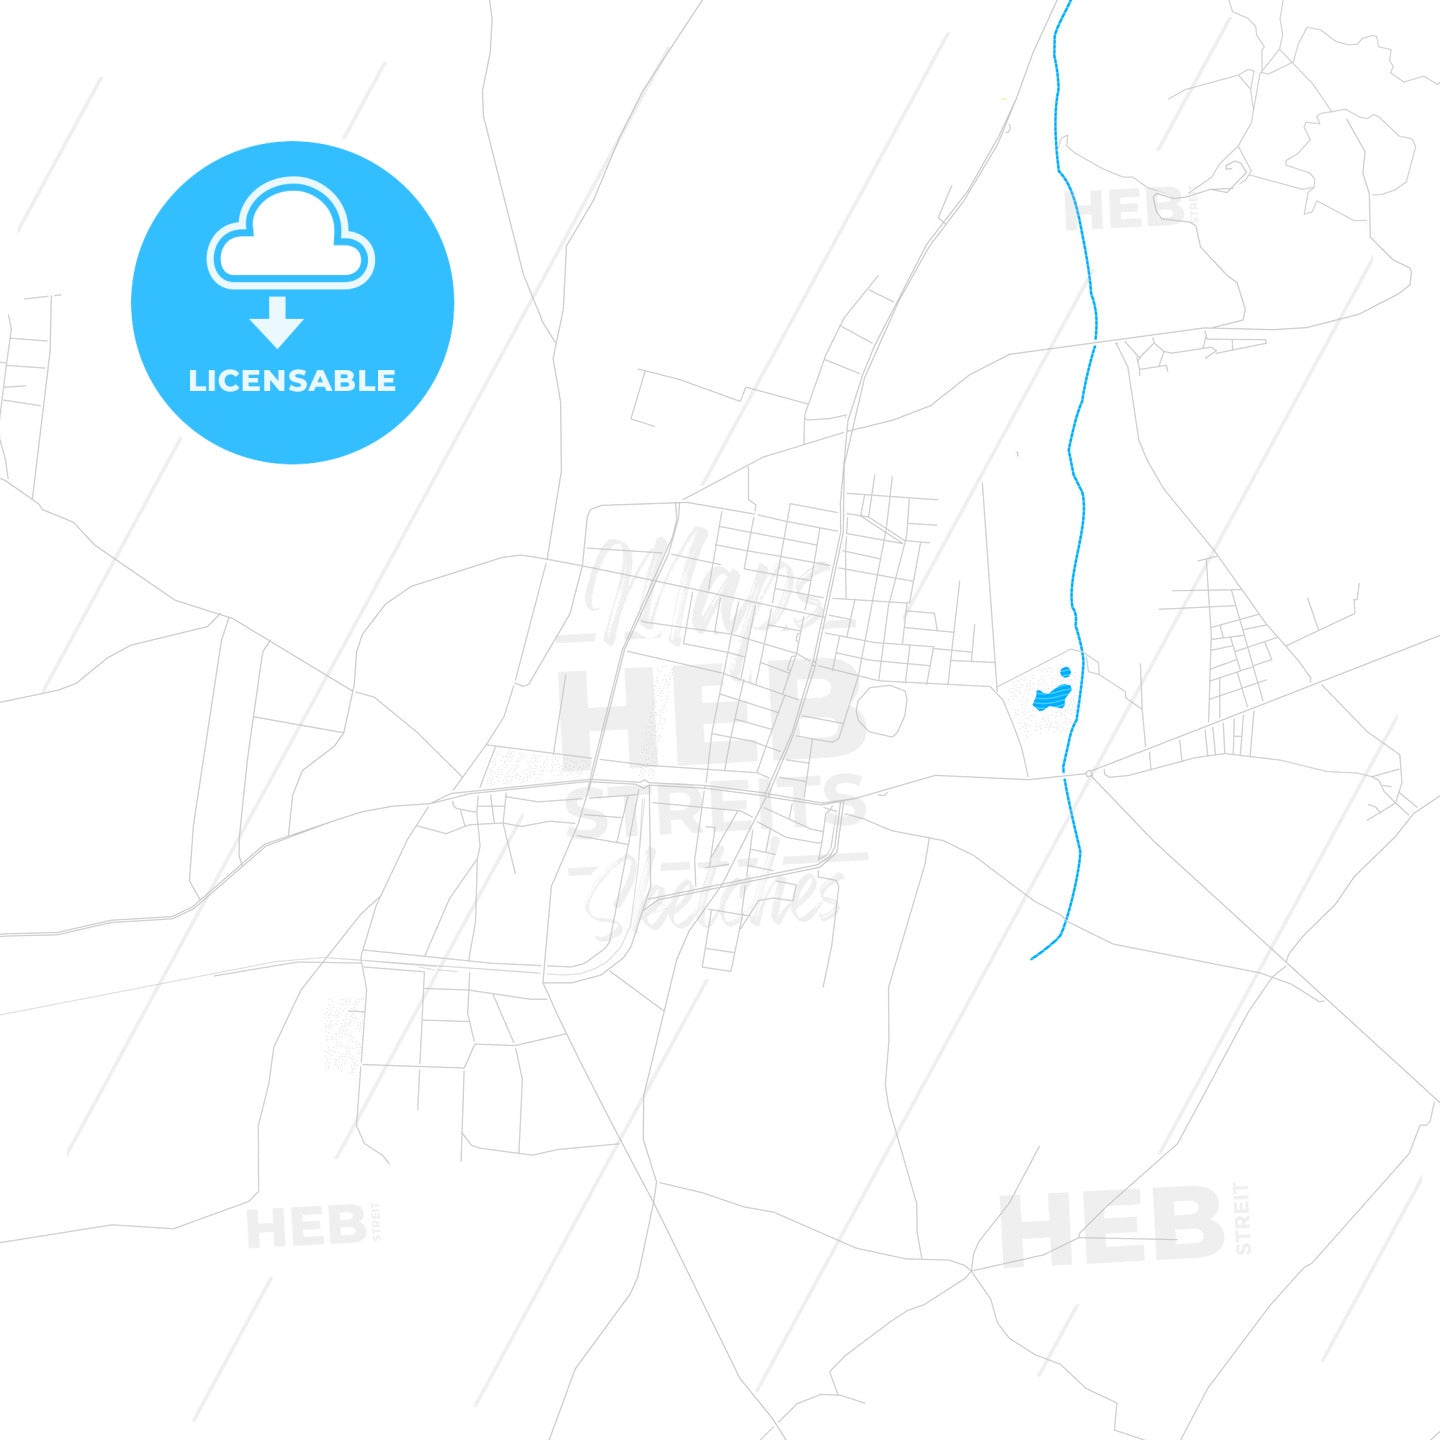 Ödemiş, Turkey PDF vector map with water in focus